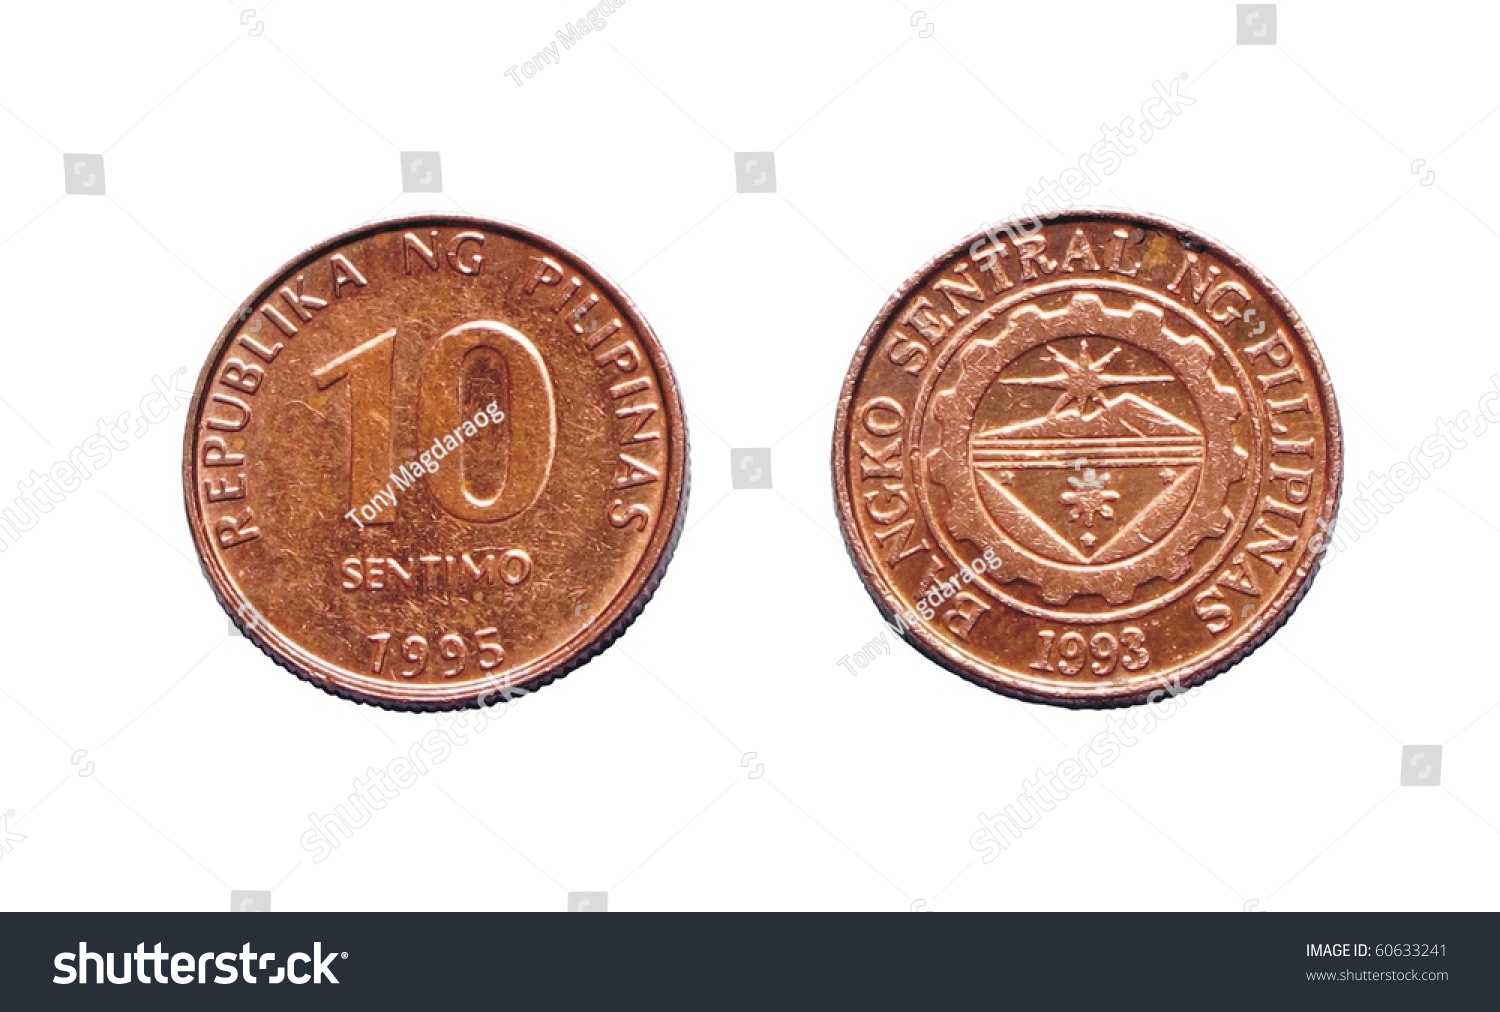 philippine money clipart - photo #45